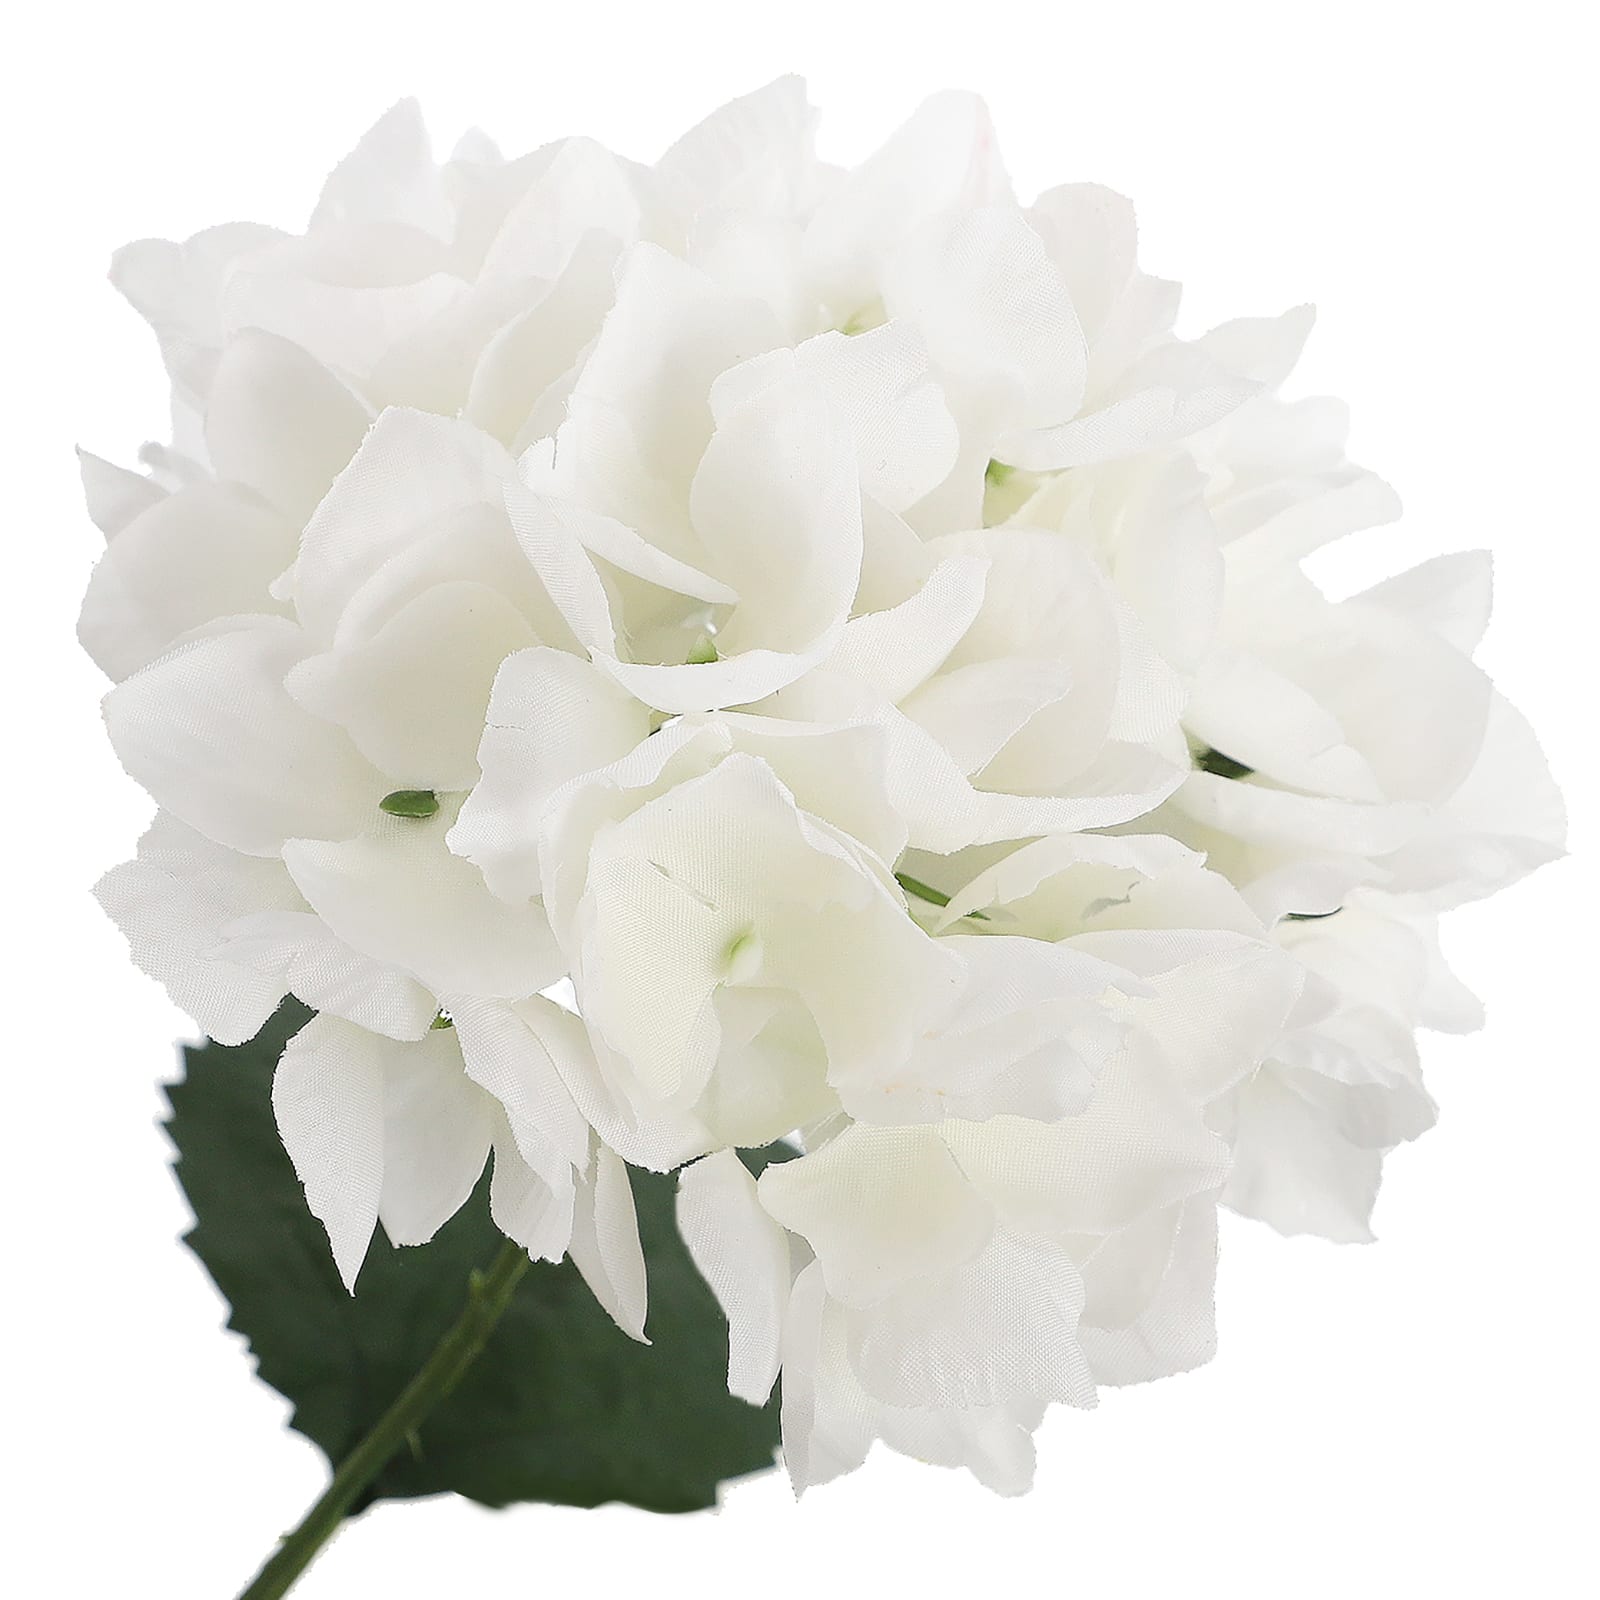 Ashland White Hydrangea Bush - each